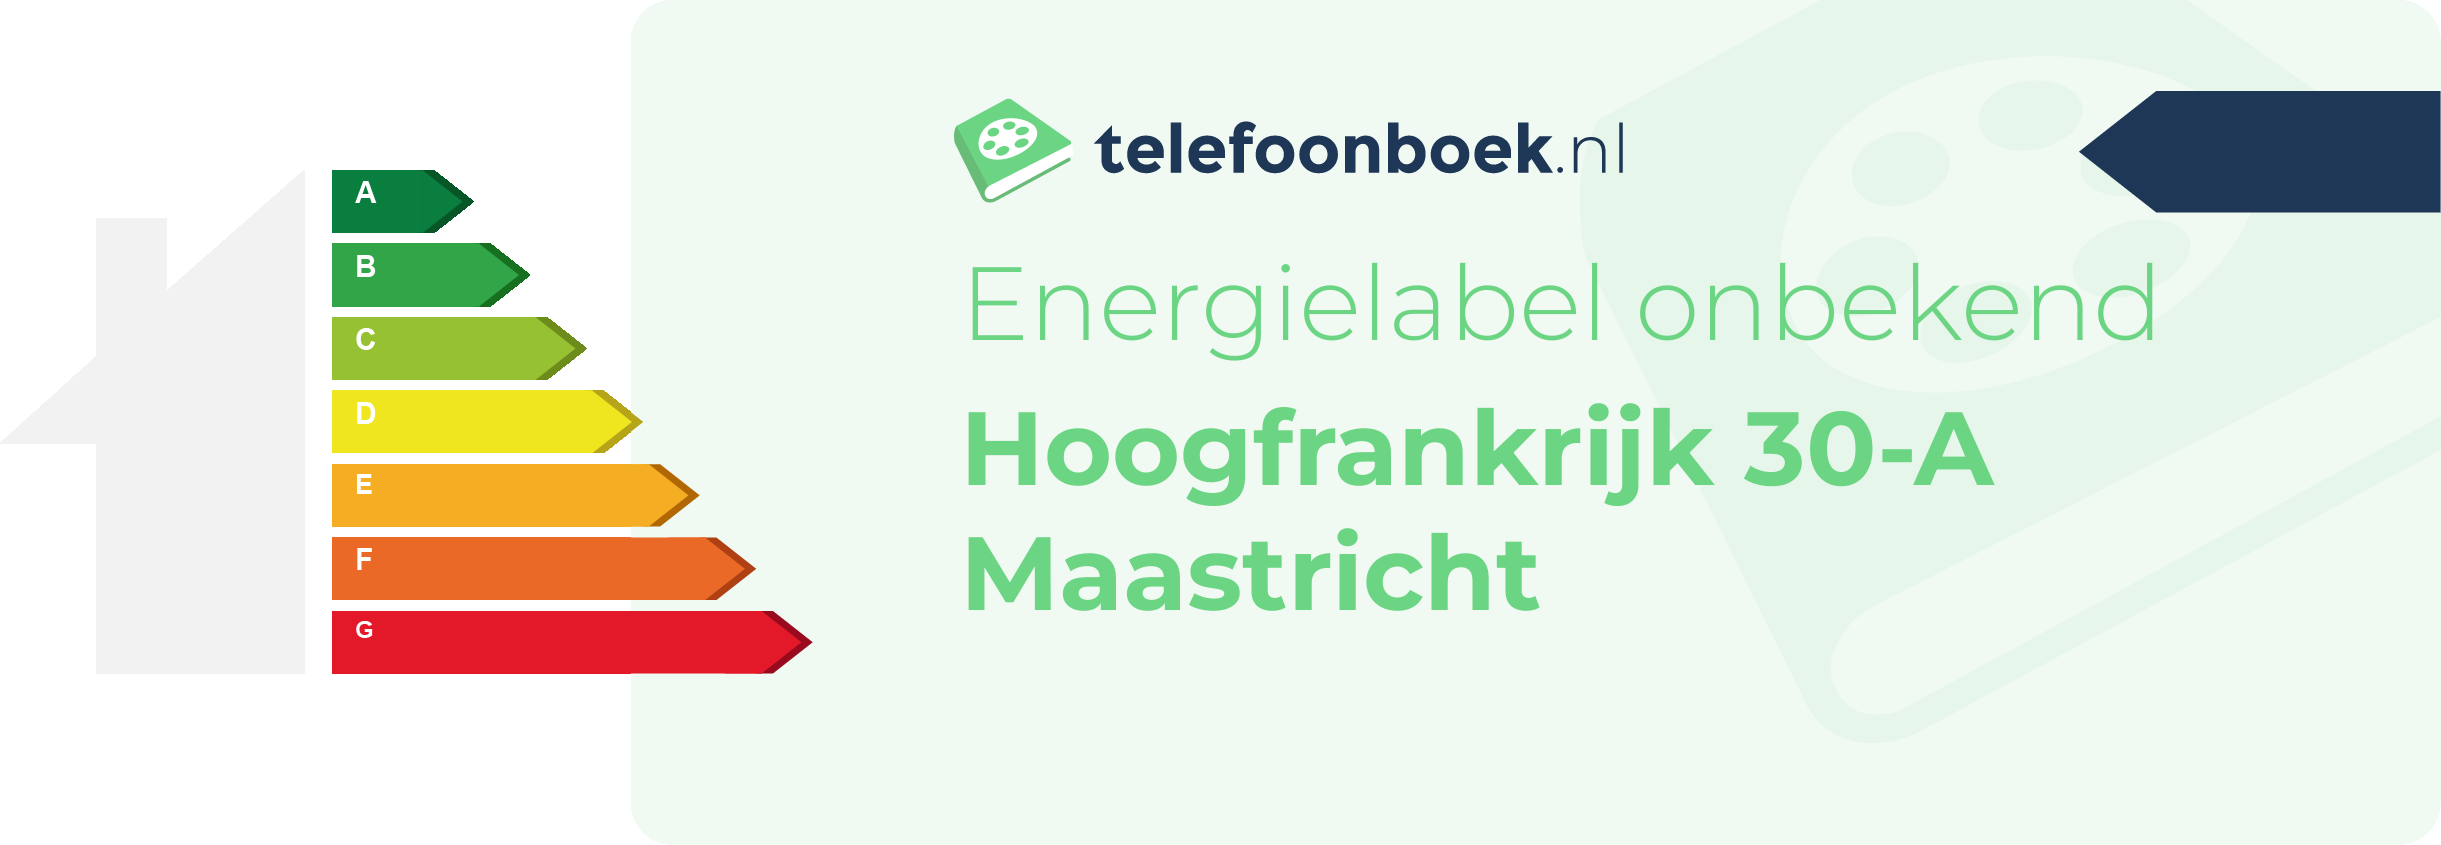 Energielabel Hoogfrankrijk 30-A Maastricht